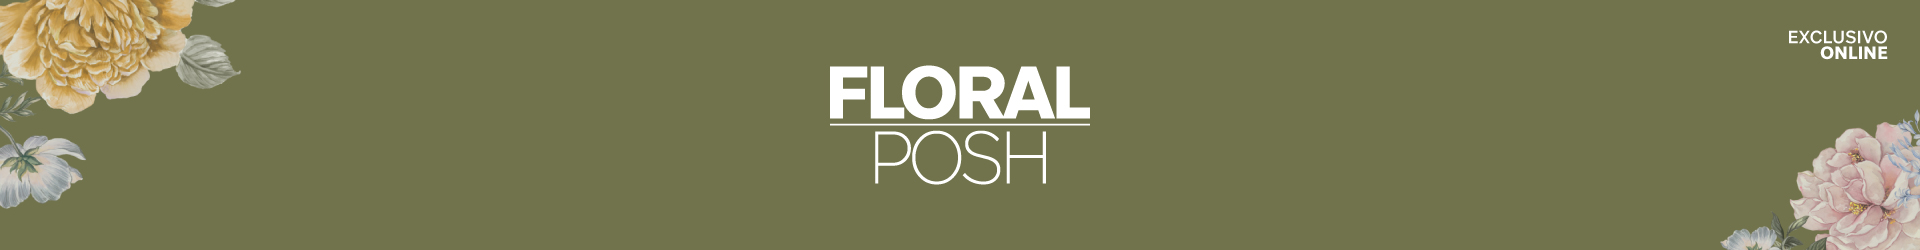 Floral Posh